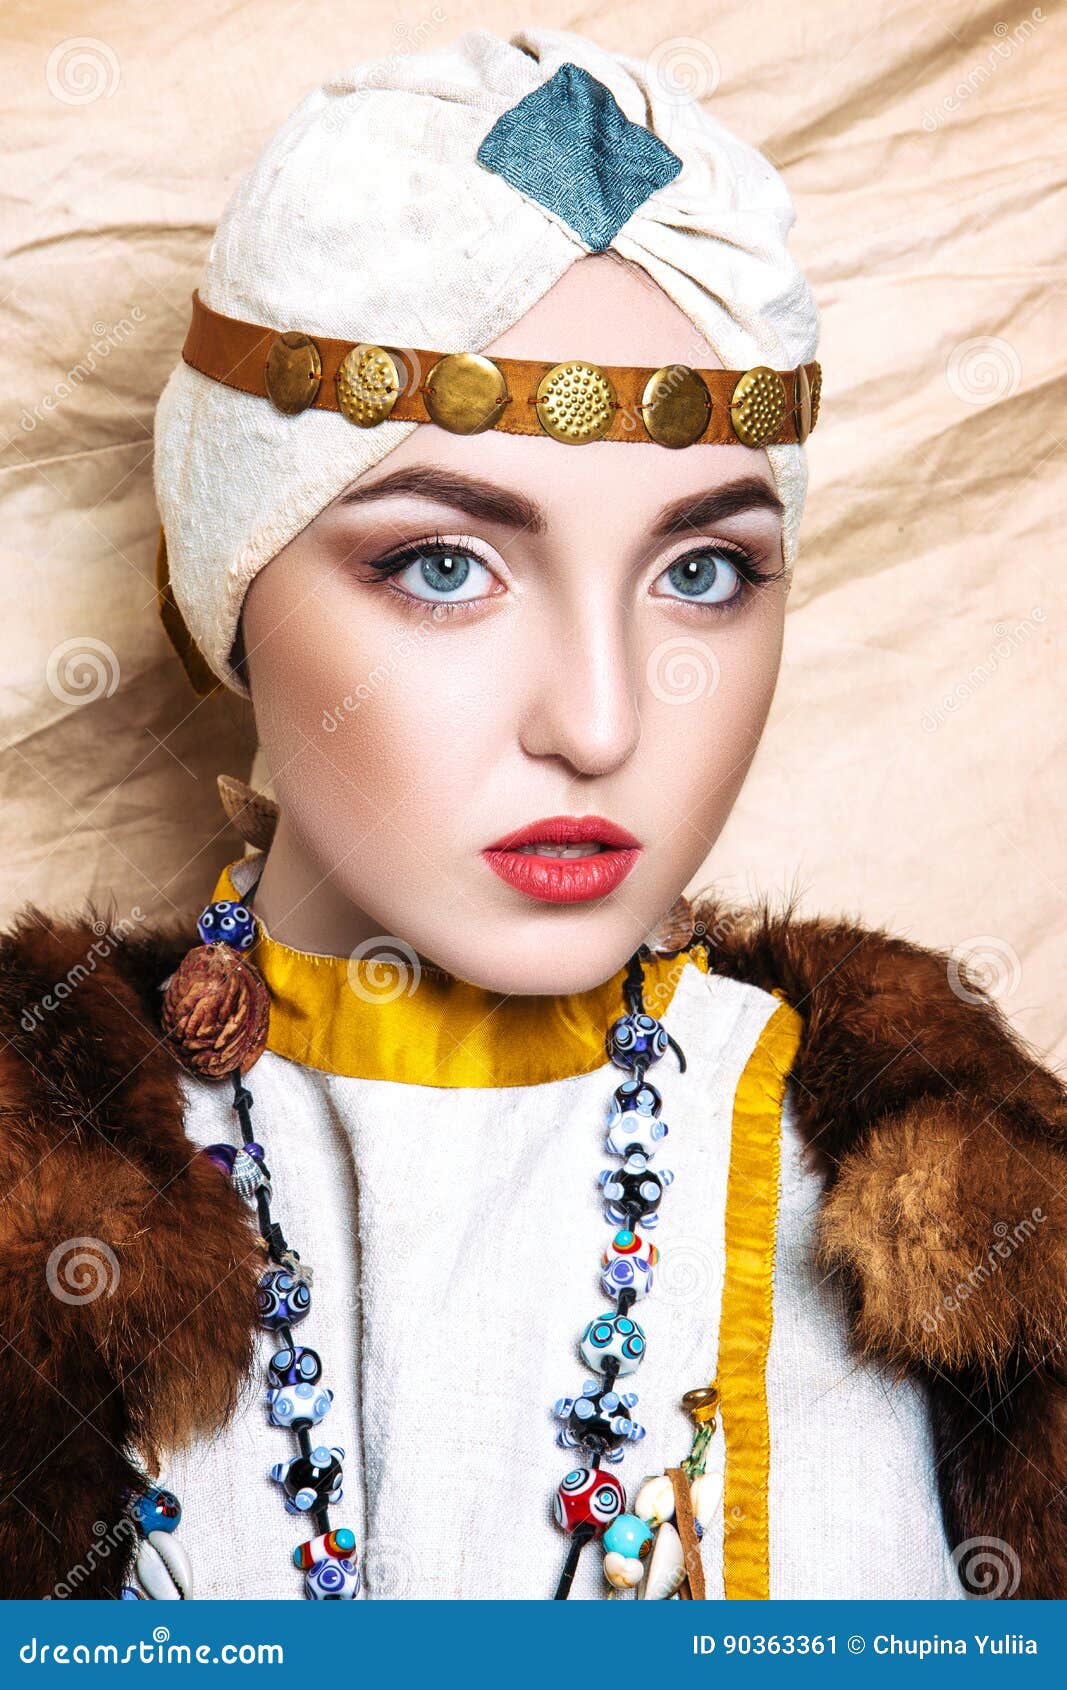 https://thumbs.dreamstime.com/z/portrait-slavic-women-past-national-vintage-clothing-woman-historical-reconstruction-studio-90363361.jpg